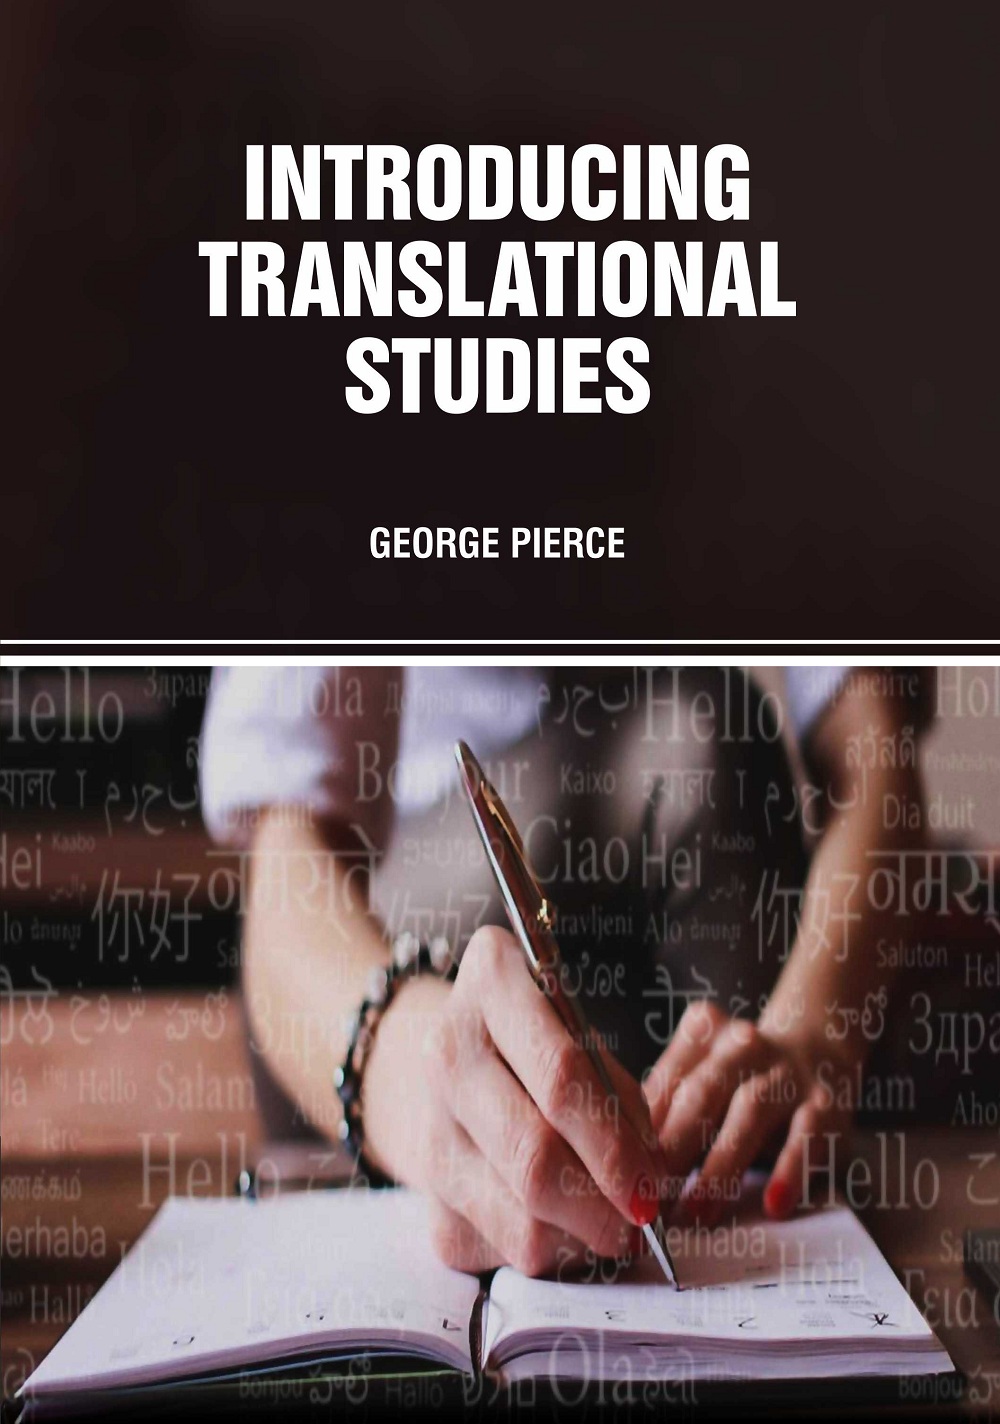 masters dissertation topics in translation studies